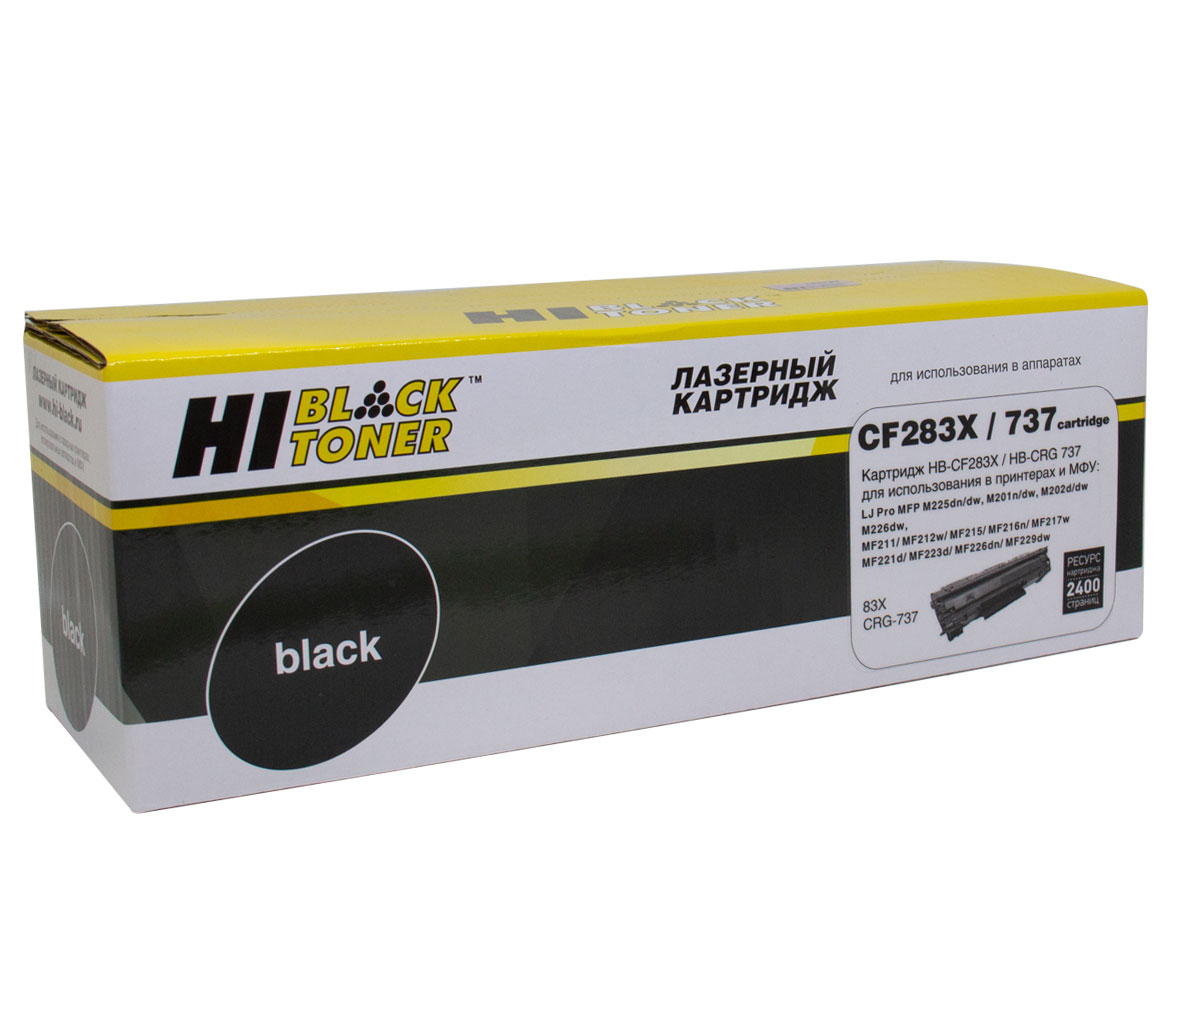 Картридж Hi-Black (HB-CF283X) для HP LJ Pro M225MFP/M201/Canon №737, 2,4K - купить с доставкой по России